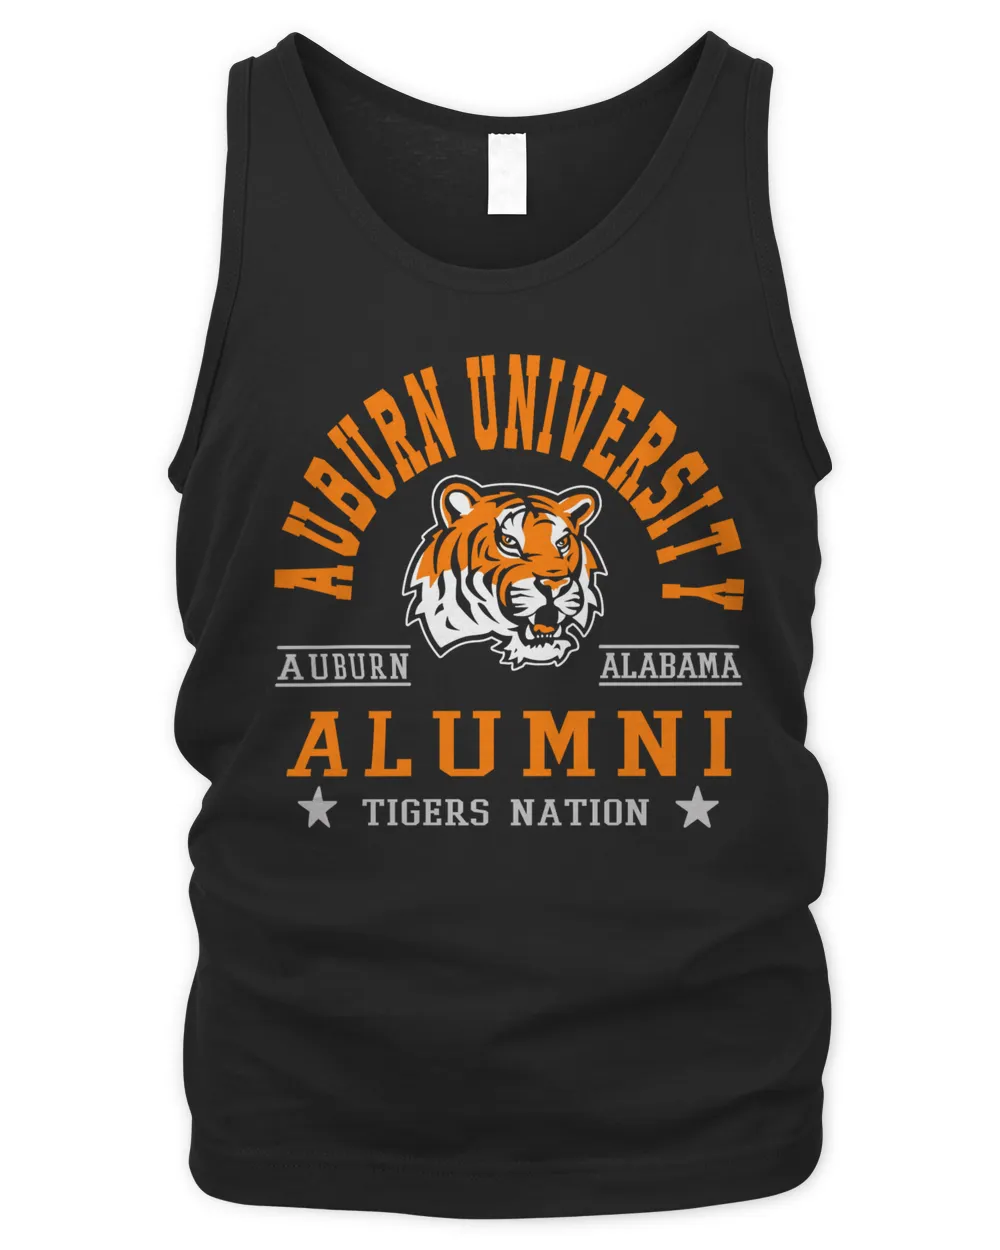 Auburn Uni Nation